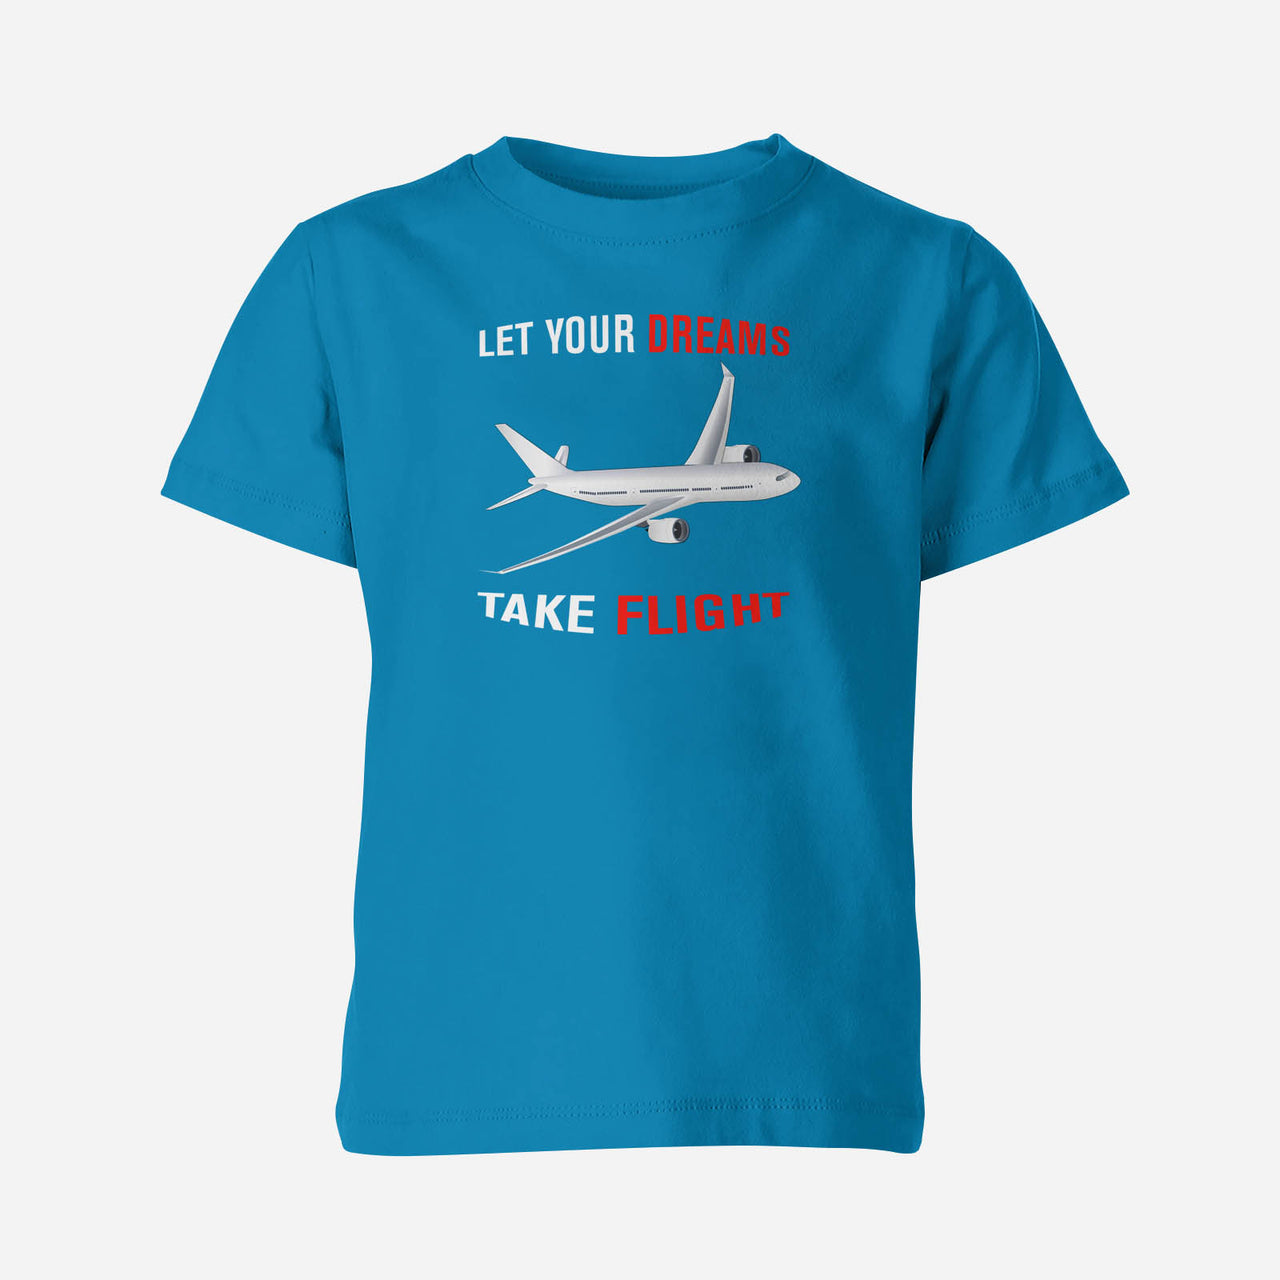 Let Your Dreams Take Flight Designed Children T-Shirts